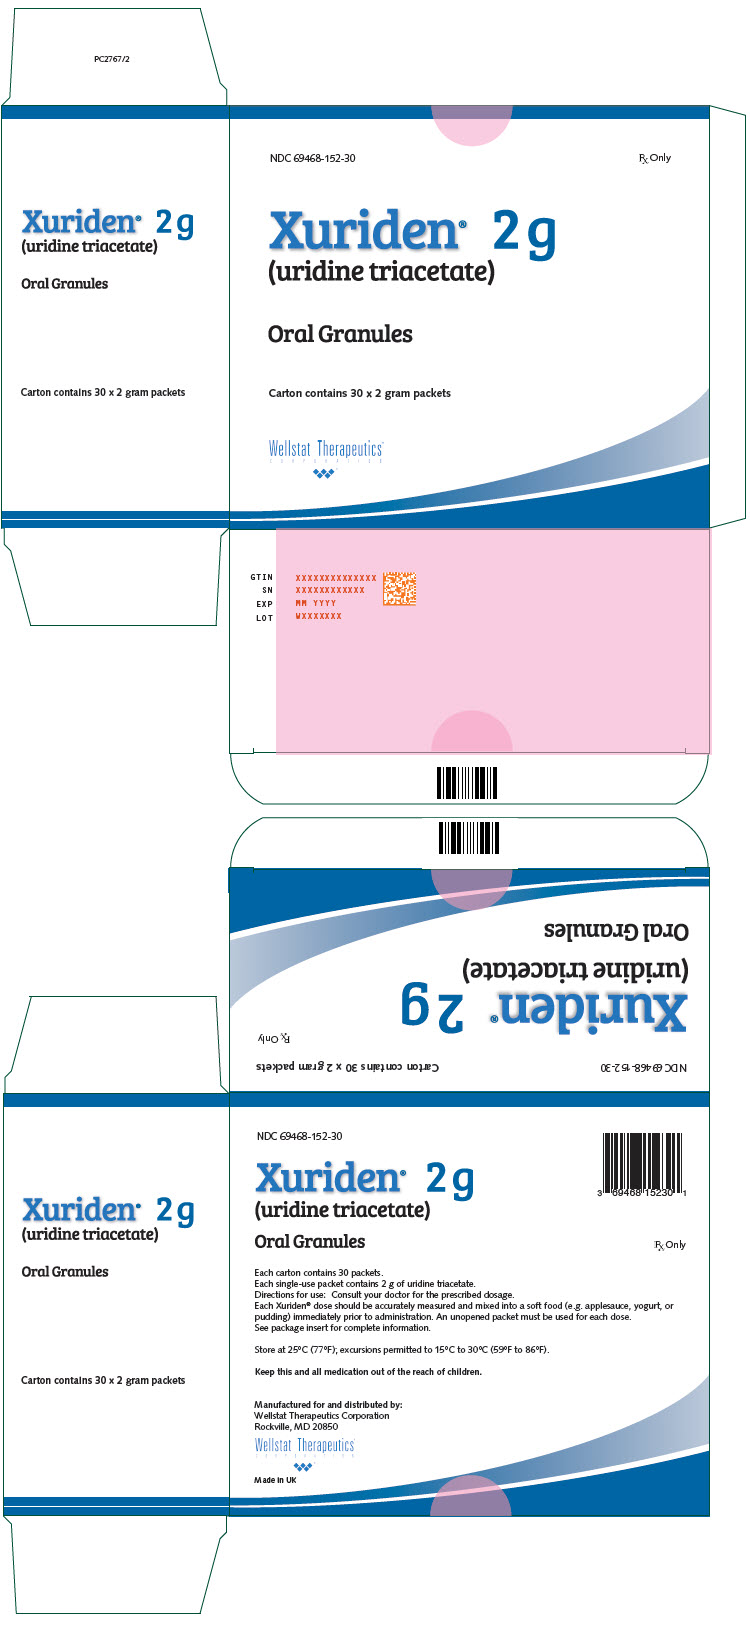 PRINCIPAL DISPLAY PANEL - 2 g Packet Carton